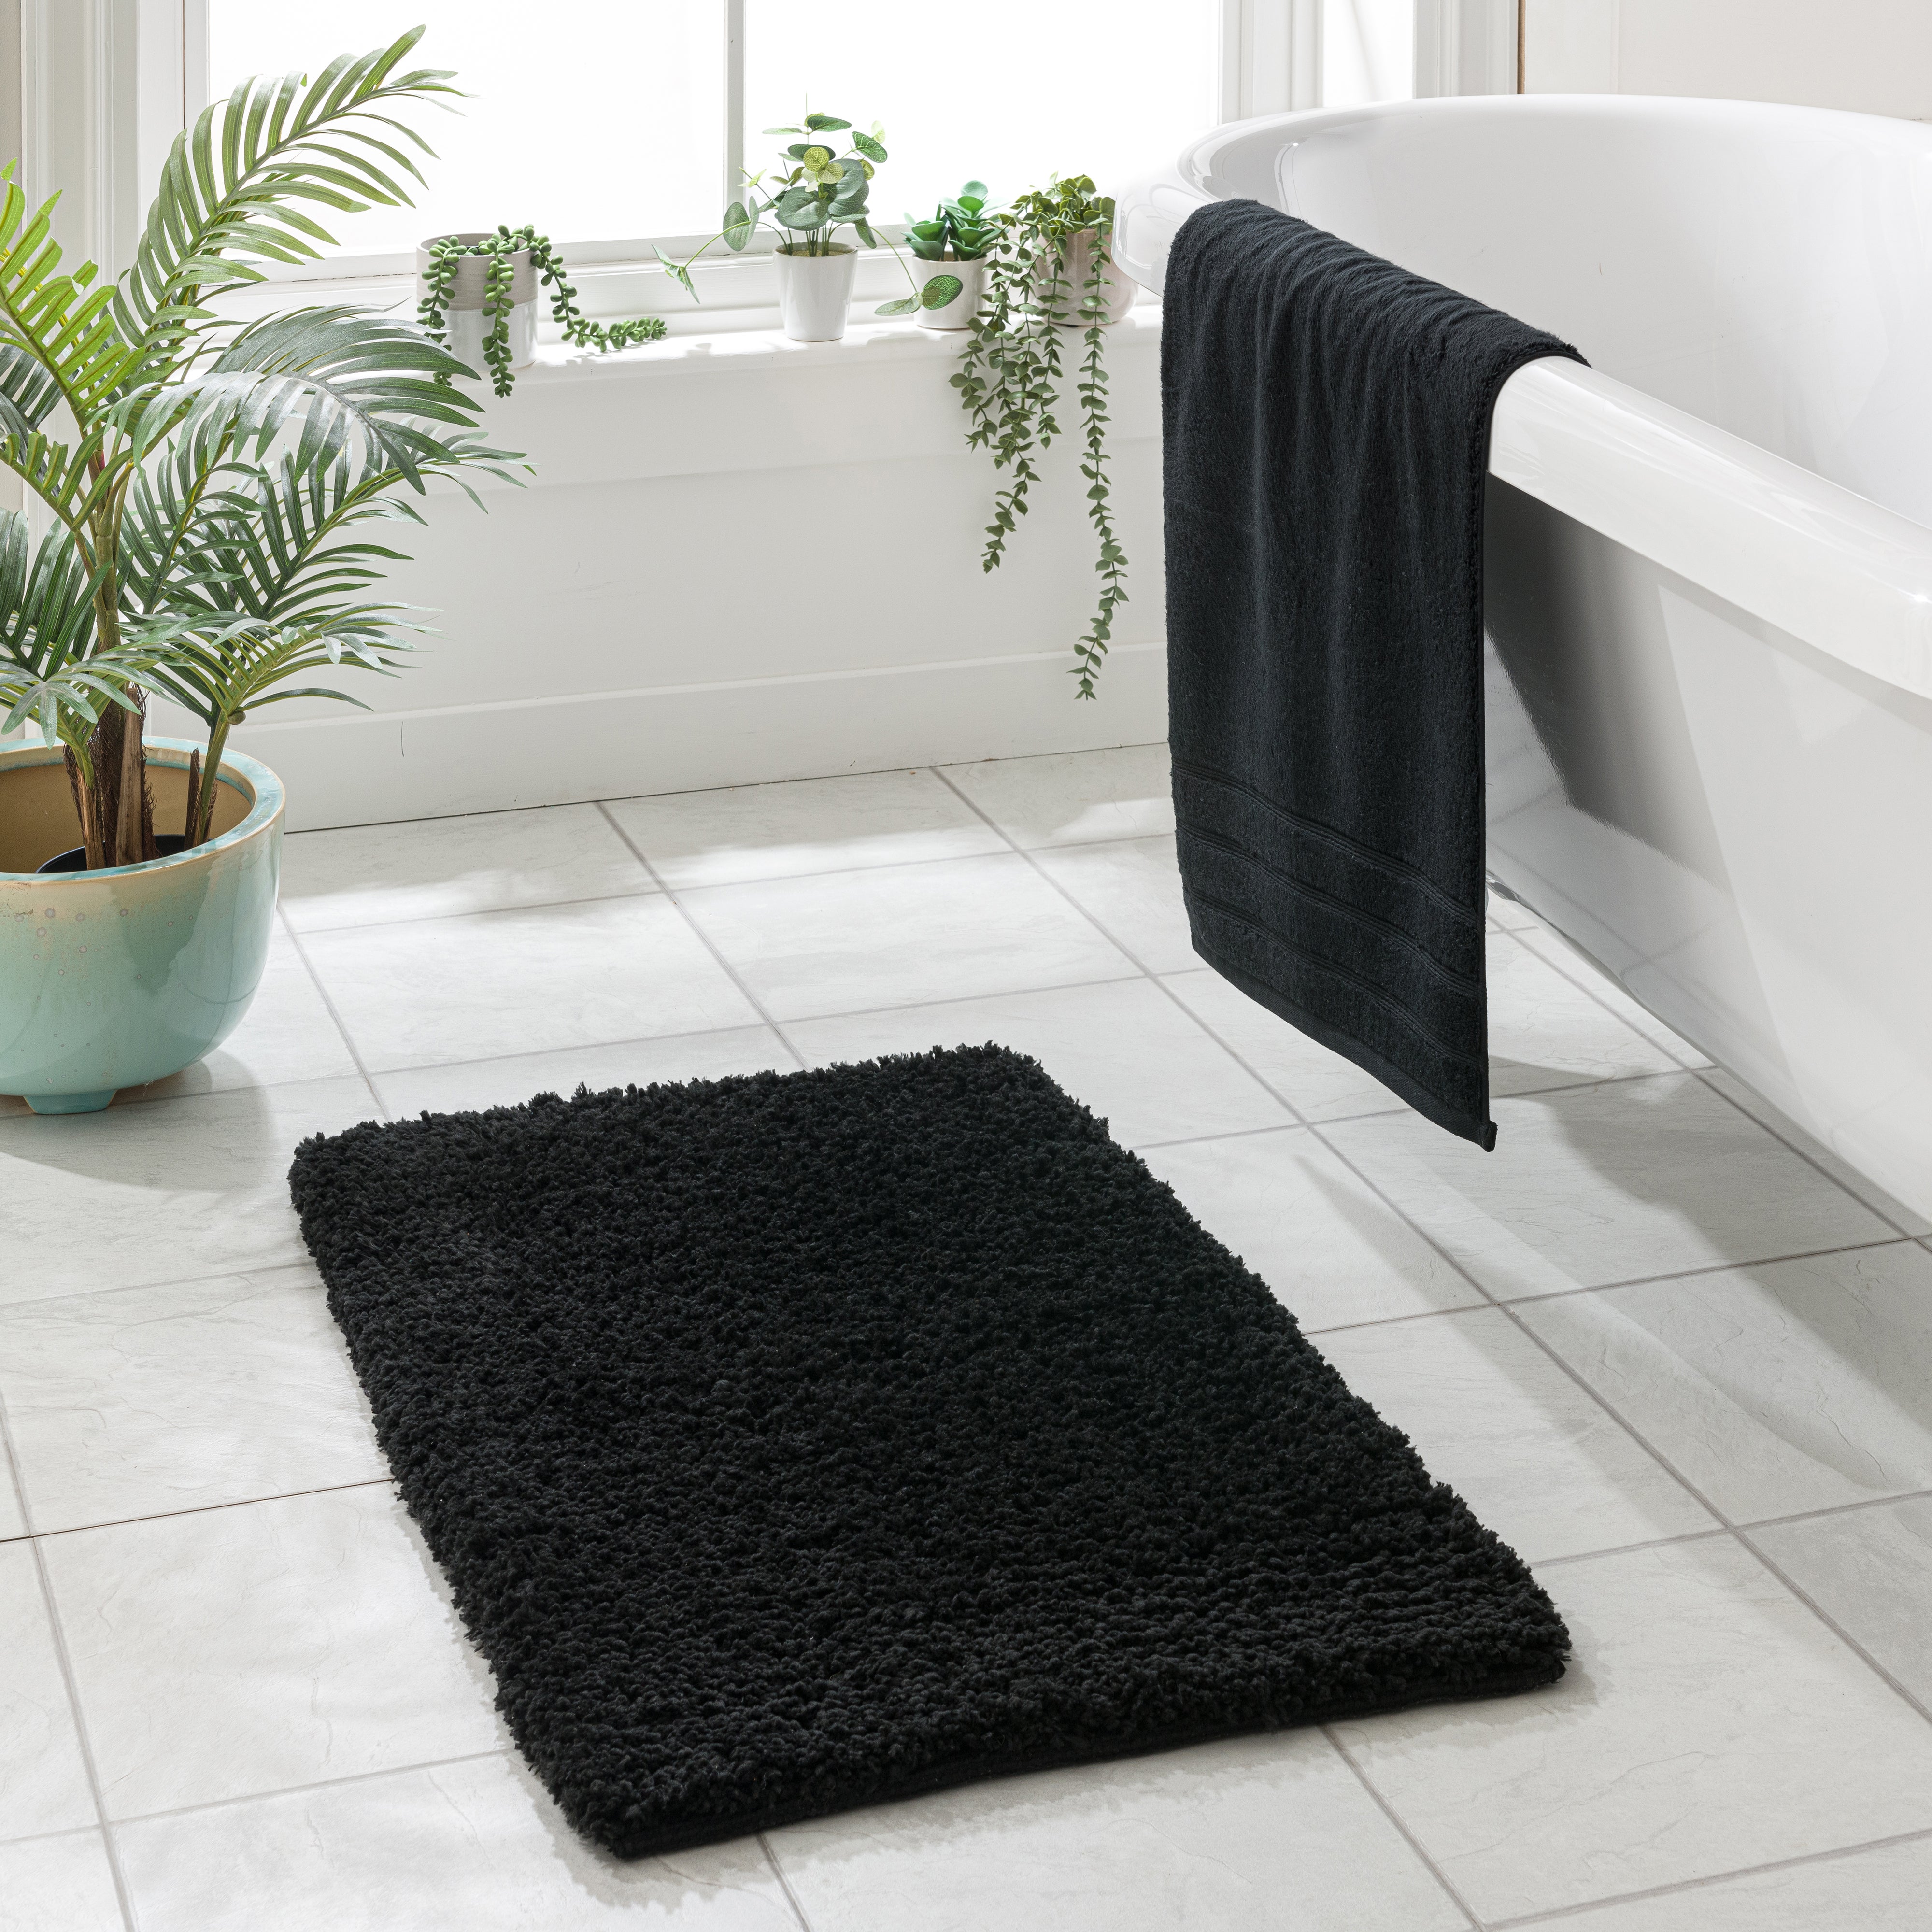 Buy Argos Home Rubber Bath Mat - White | Bath mats | Argos